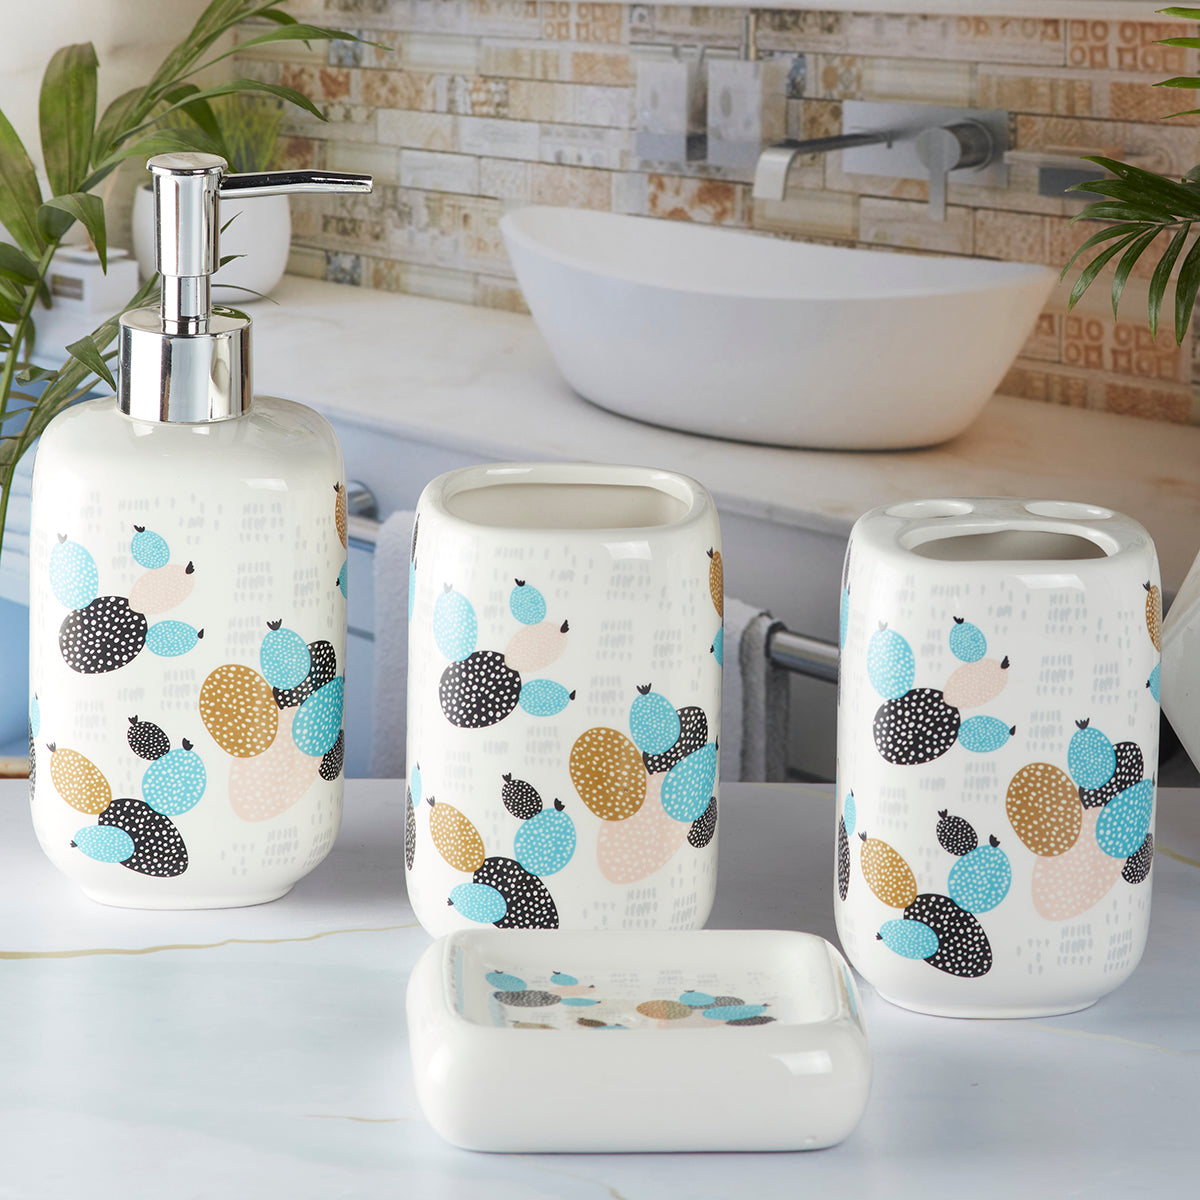 Ceramic Bathroom Set of 4 with Soap Dispenser (10452)